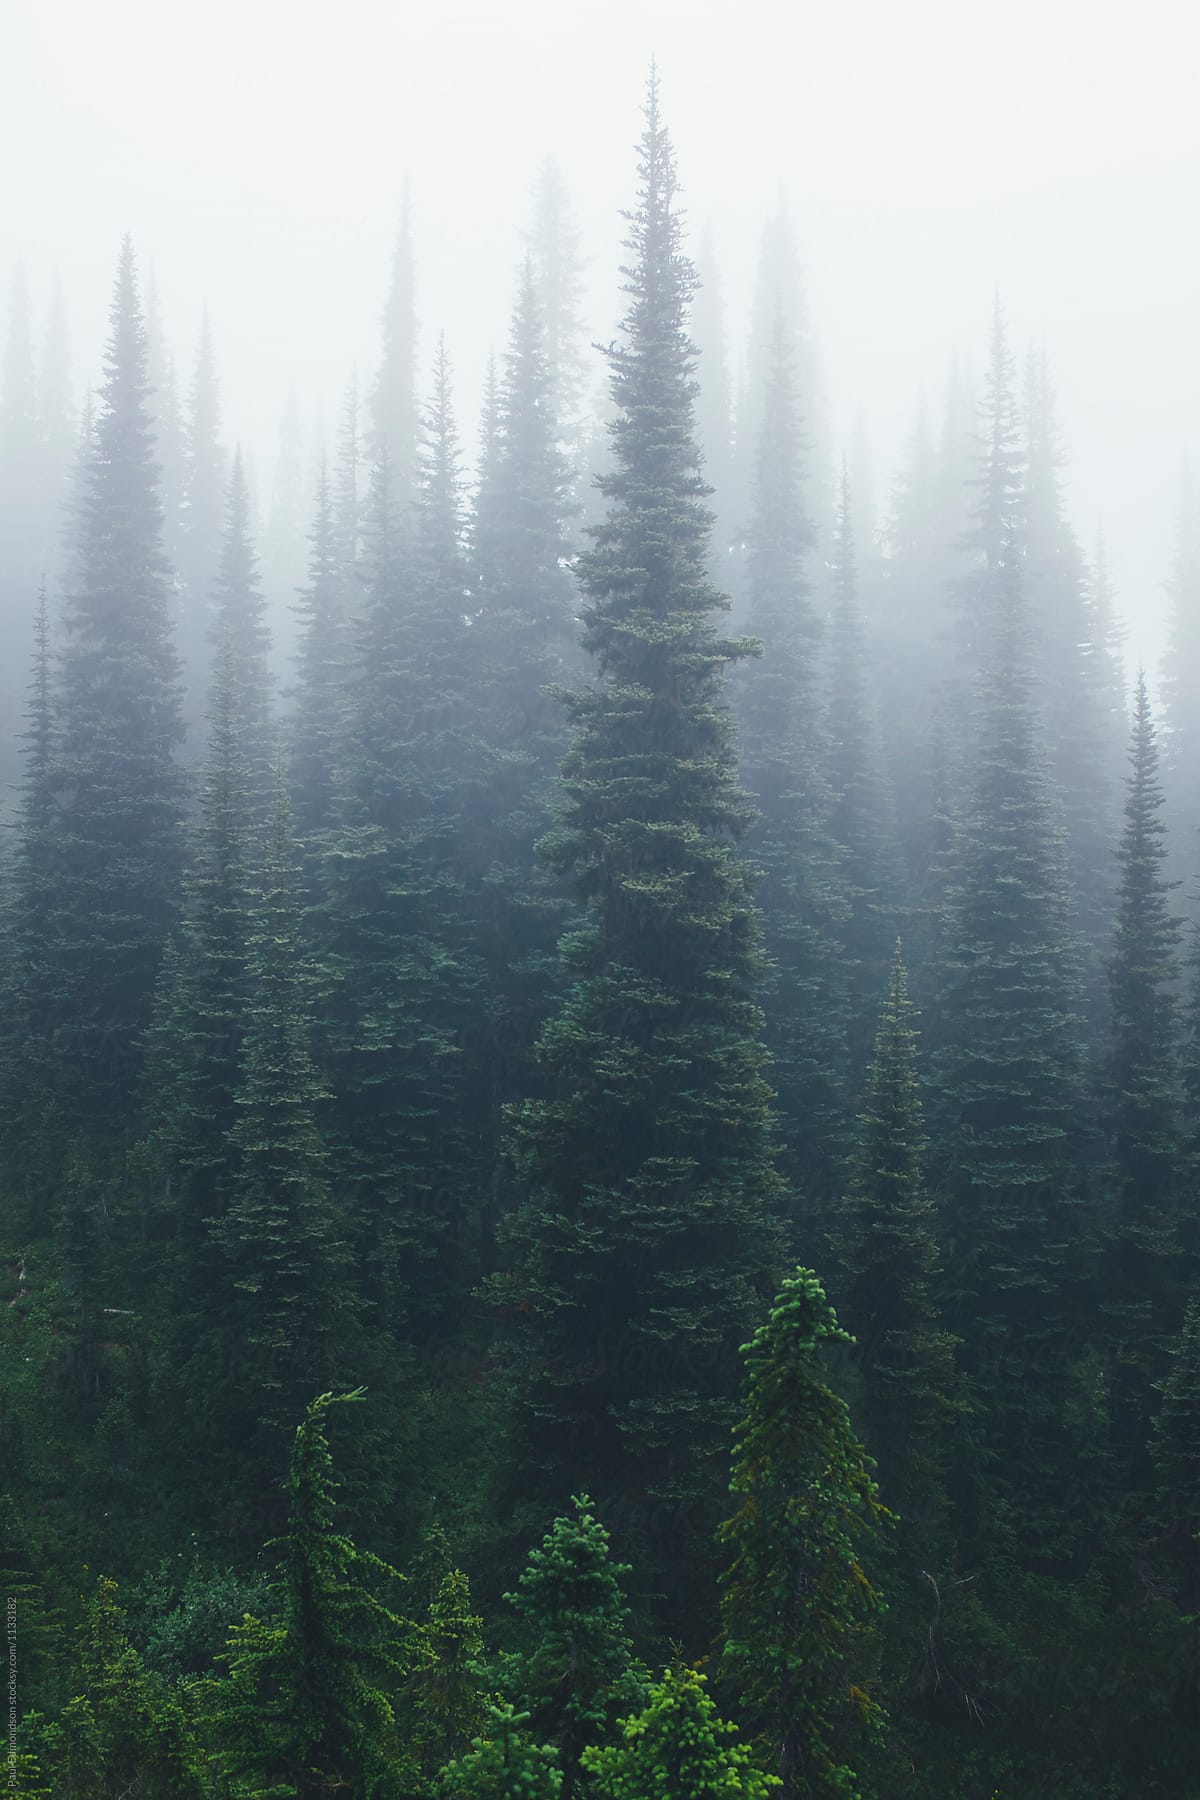 Heavy fog in alpine forest, North Cascades, WA